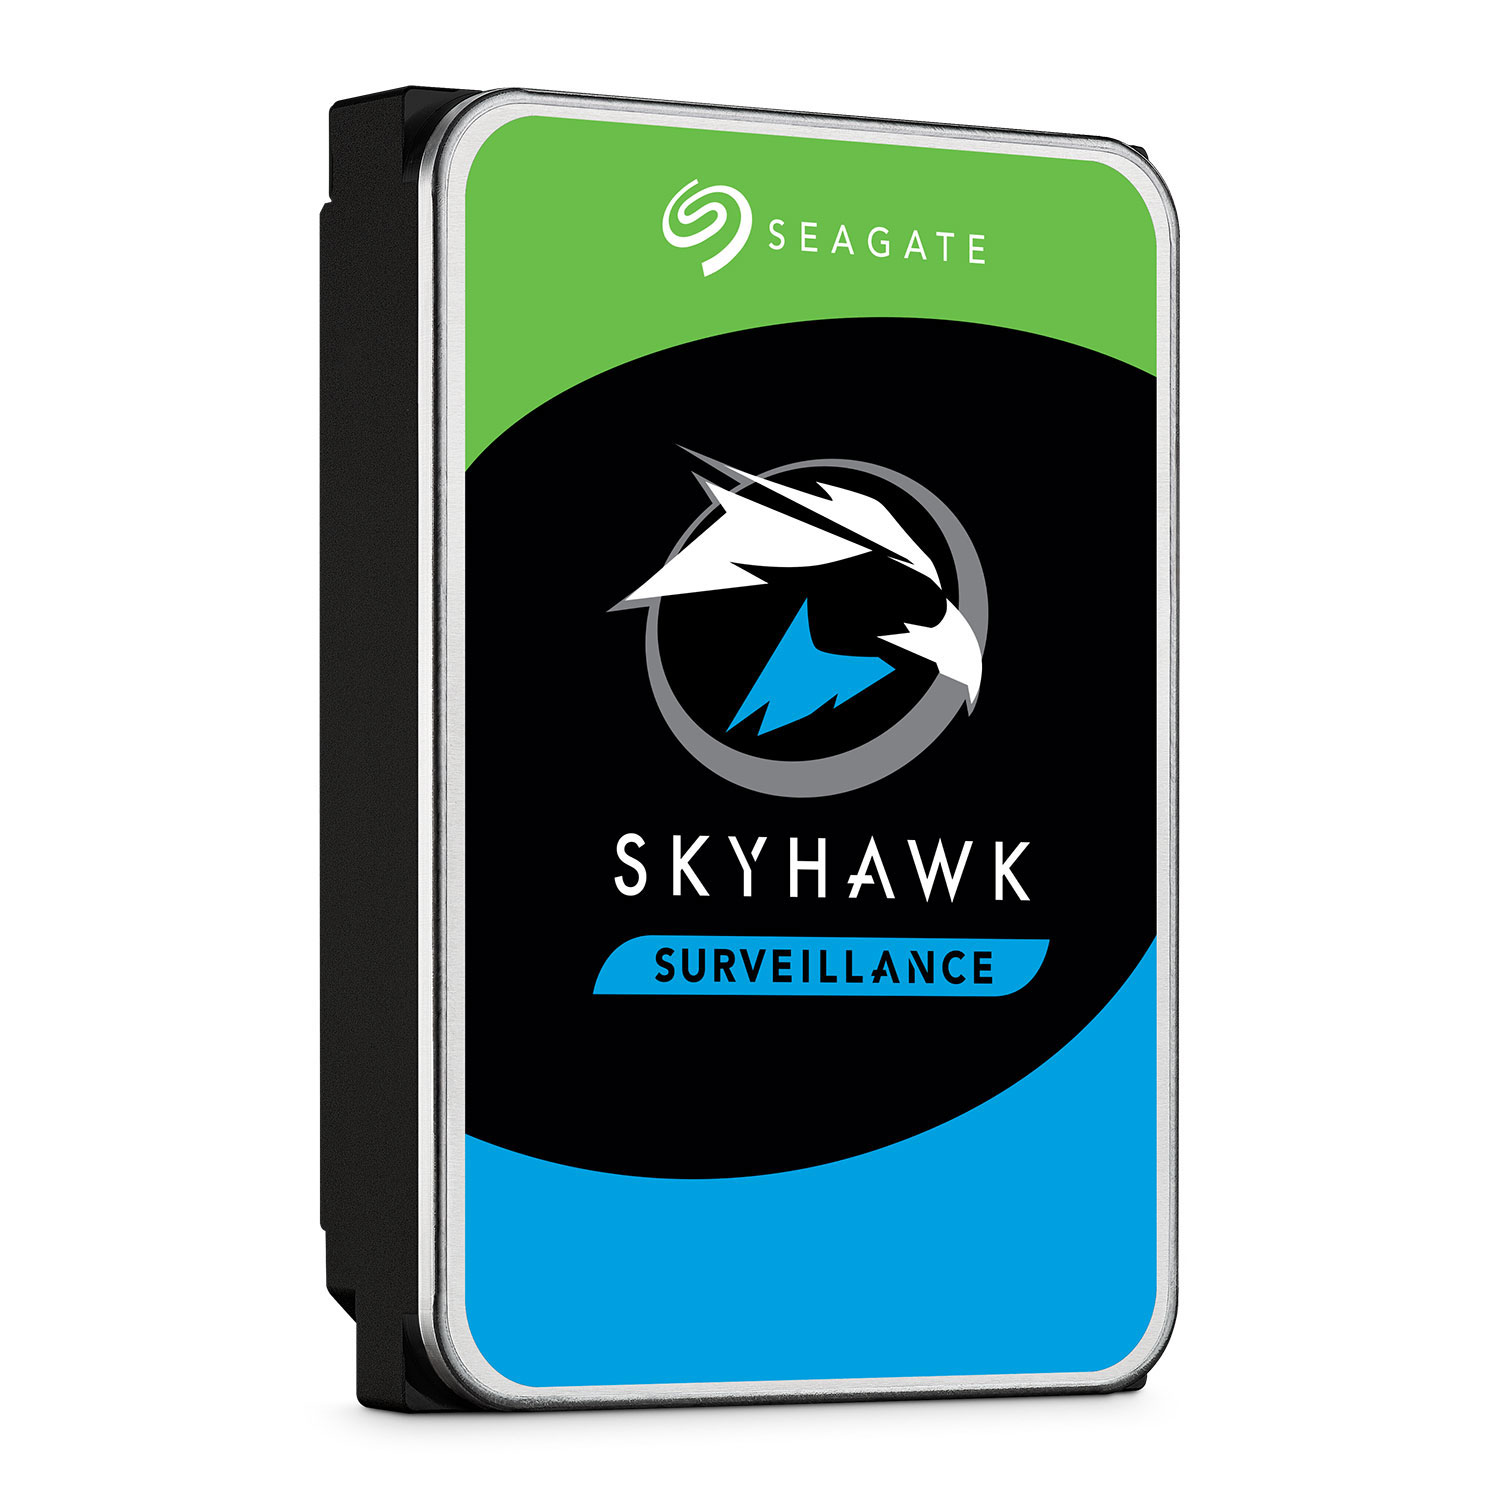 Seagate SkyHawk 2TB 3.5" SATA Surveillance HDD/Hard Drive (ST2000VX015)